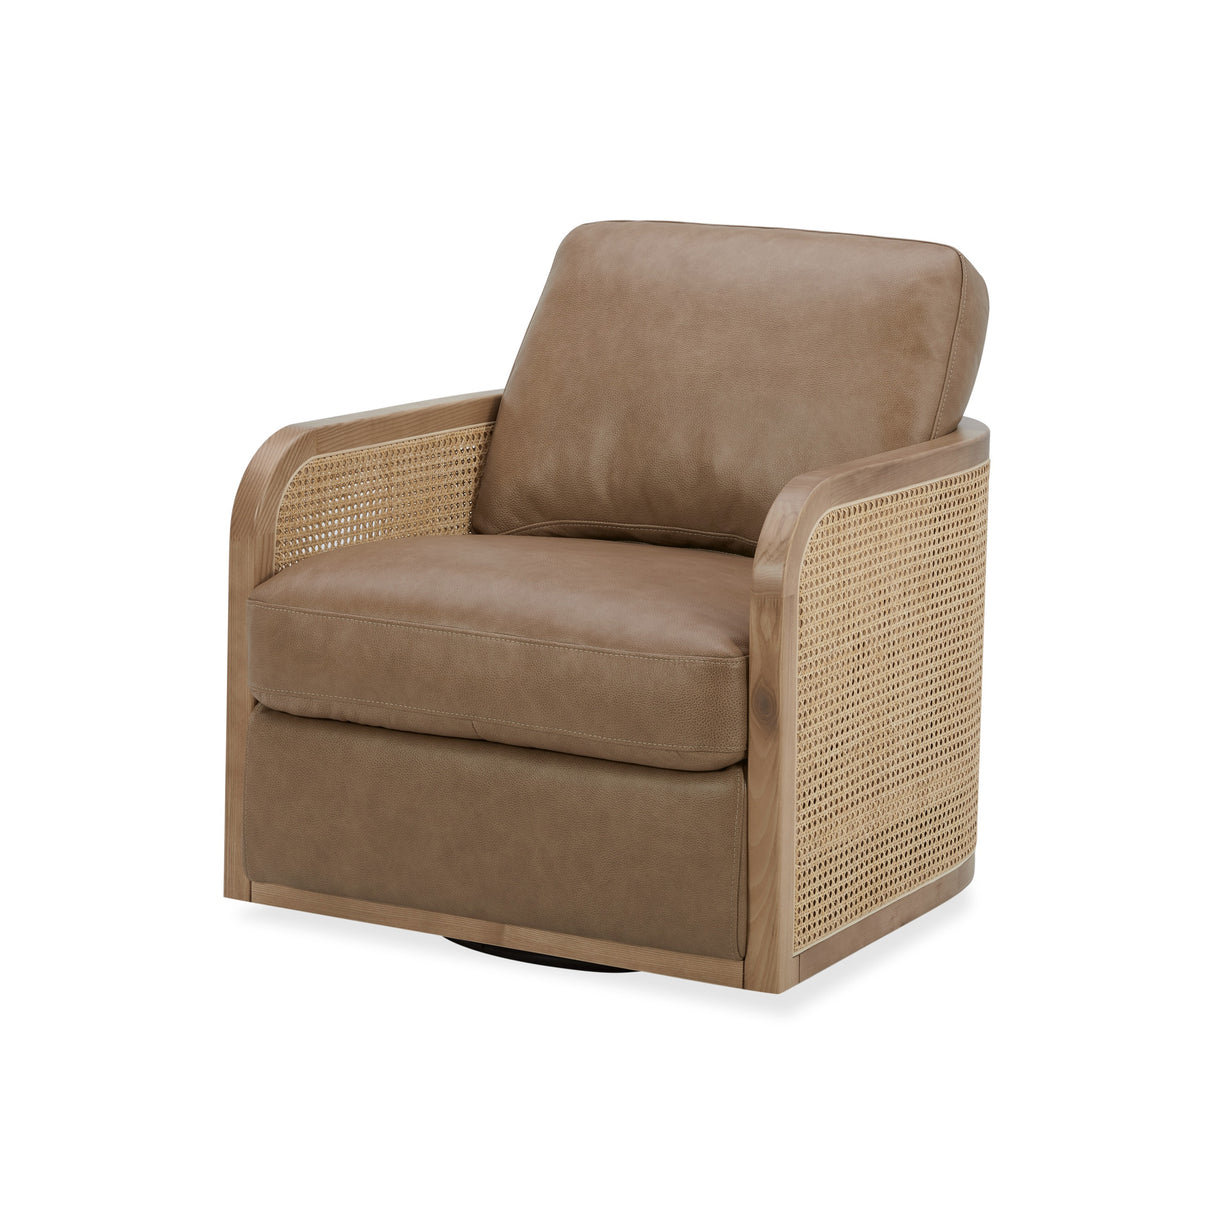 Vig Furniture Divani Casa Danson - Modern Tan Leather + Wicker Swivel Accent Chair